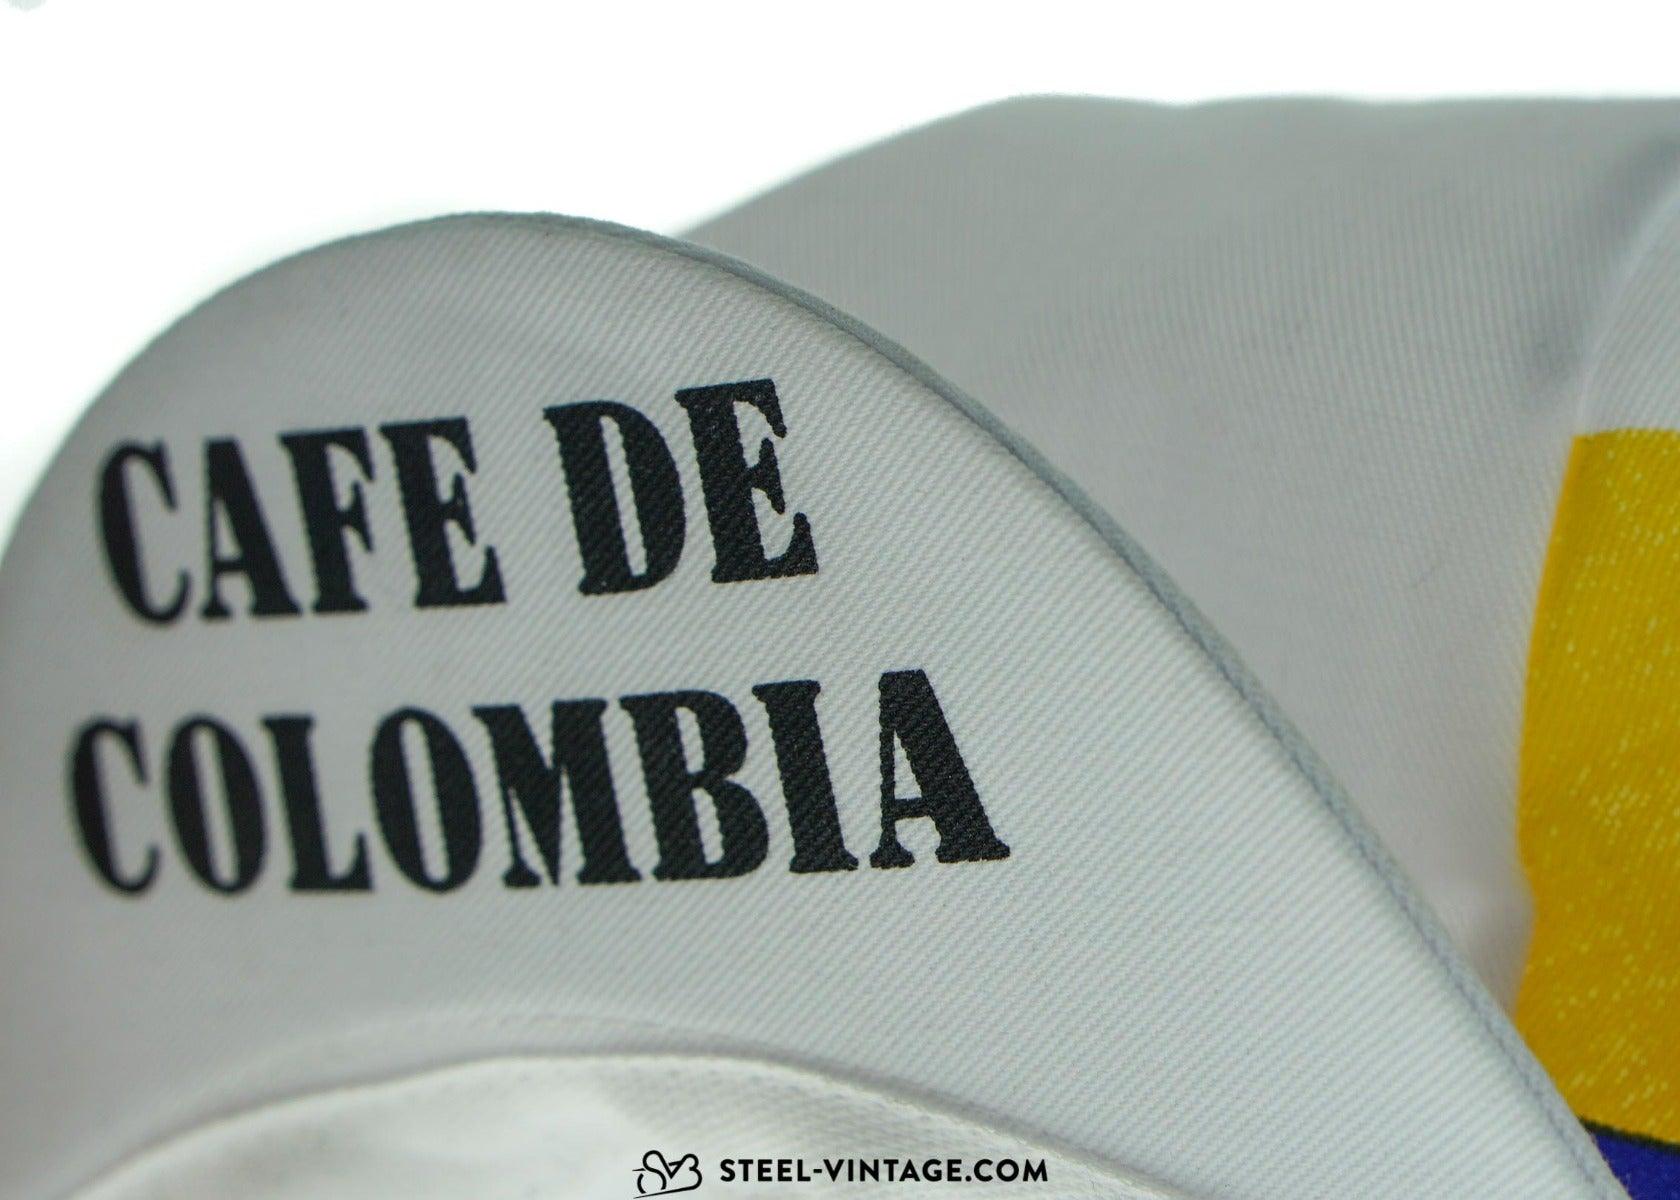 Cafe de Colombia Cycling Cap